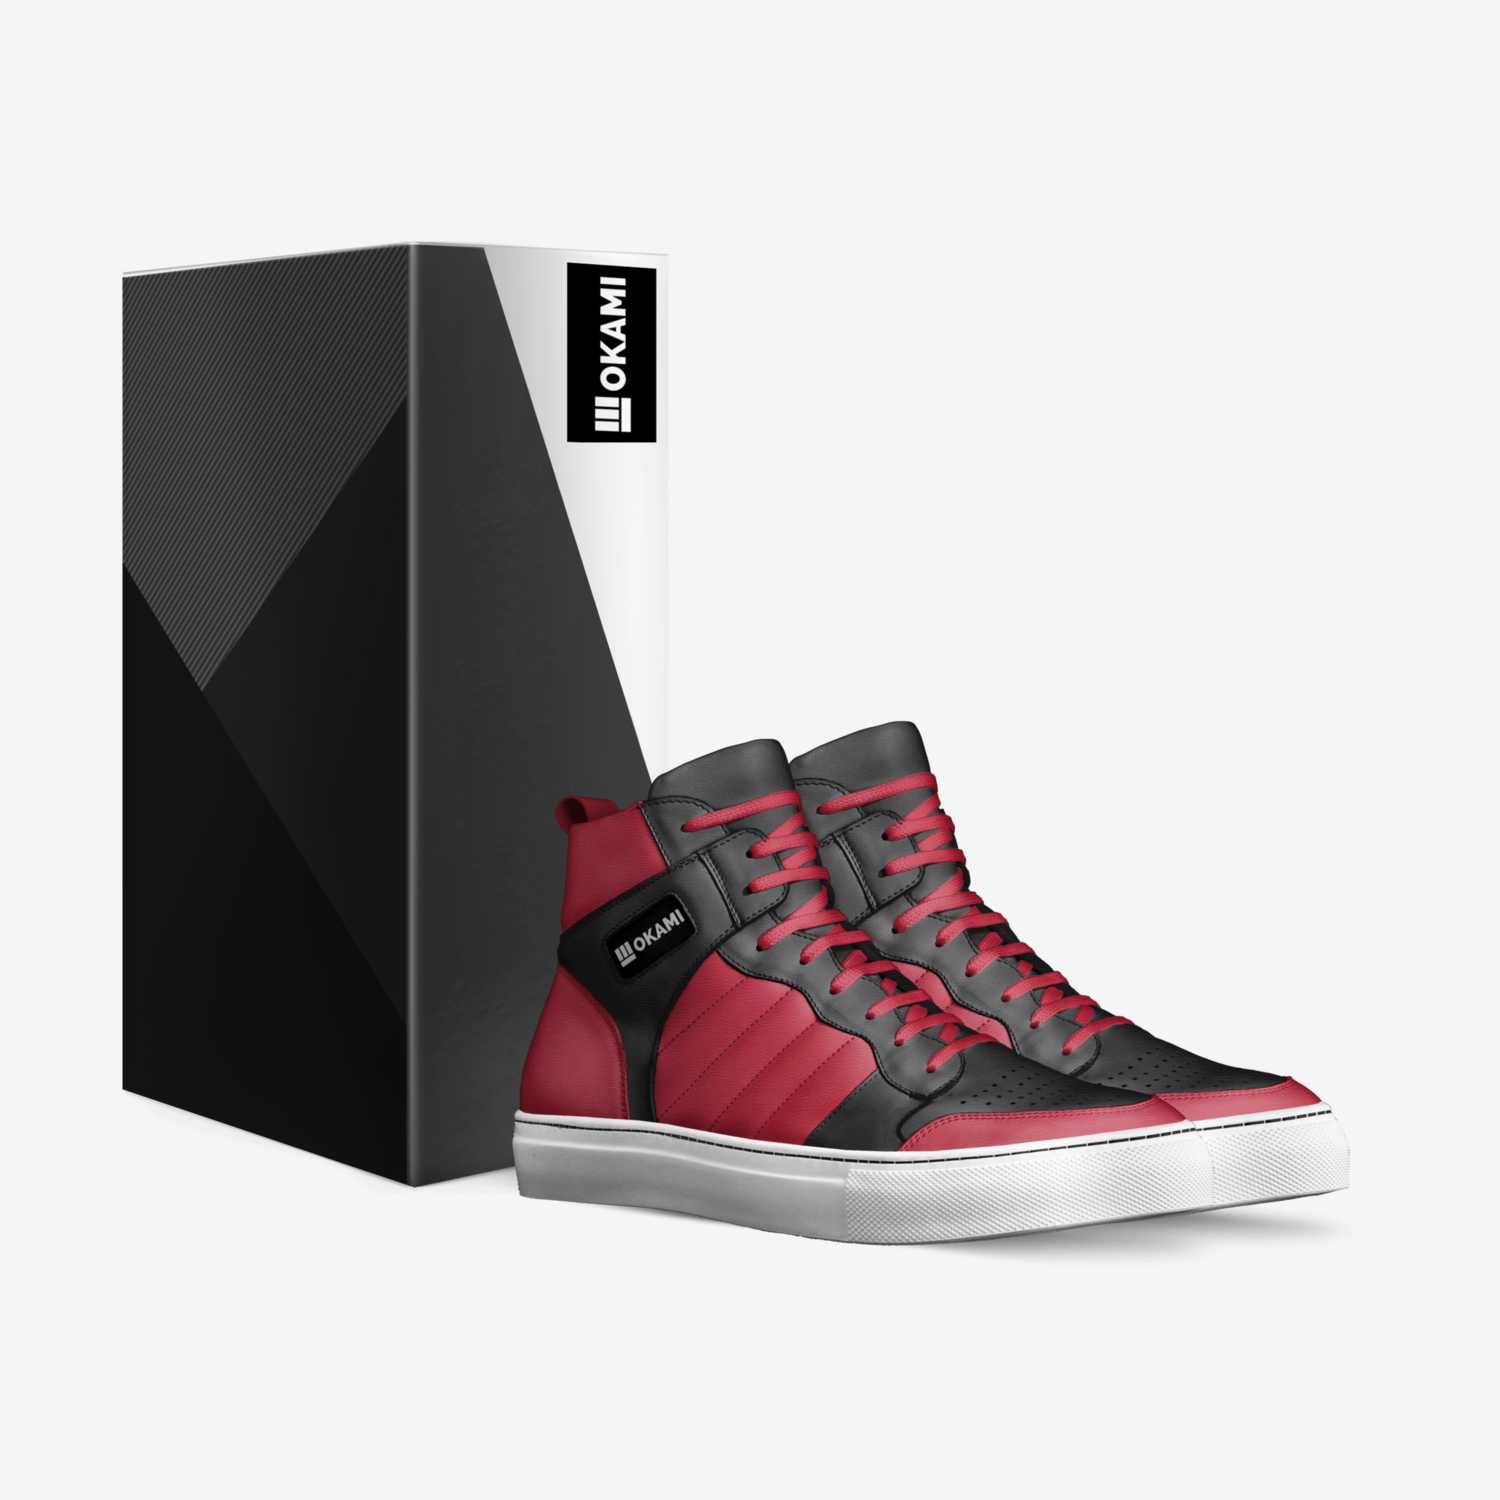 Okami I custom made in Italy shoes by Preston Holland | Box view